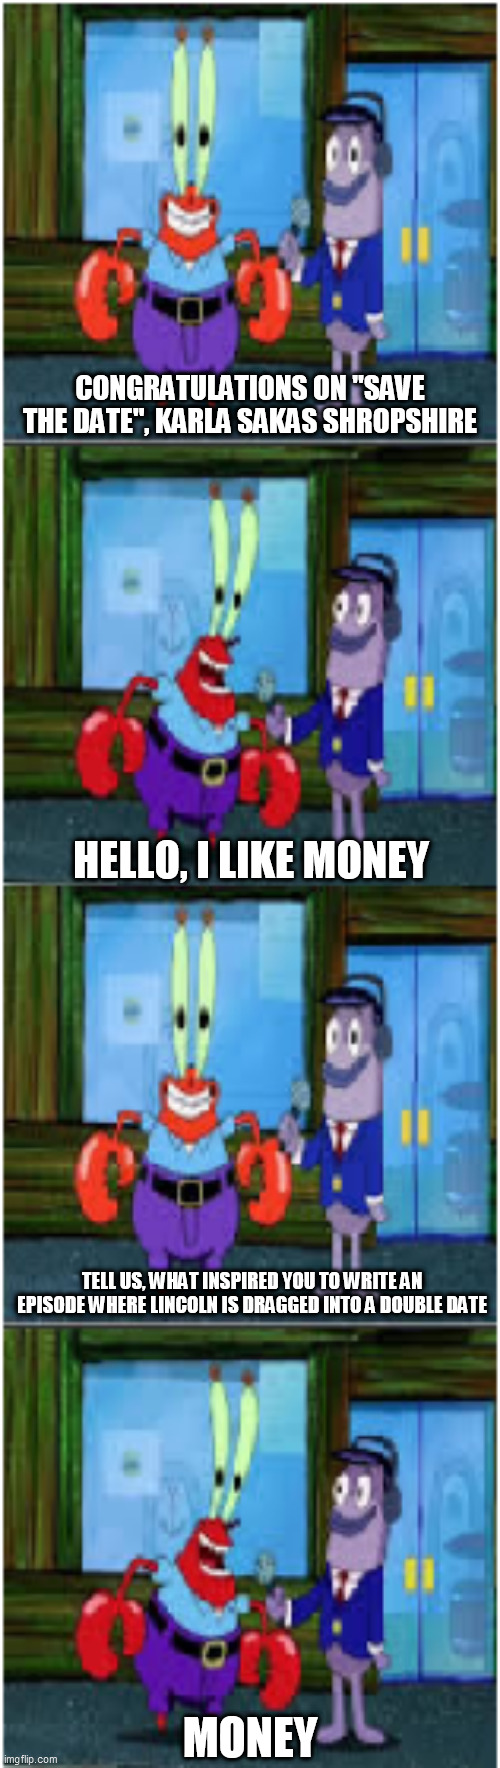 mr krabs i like moneymoney